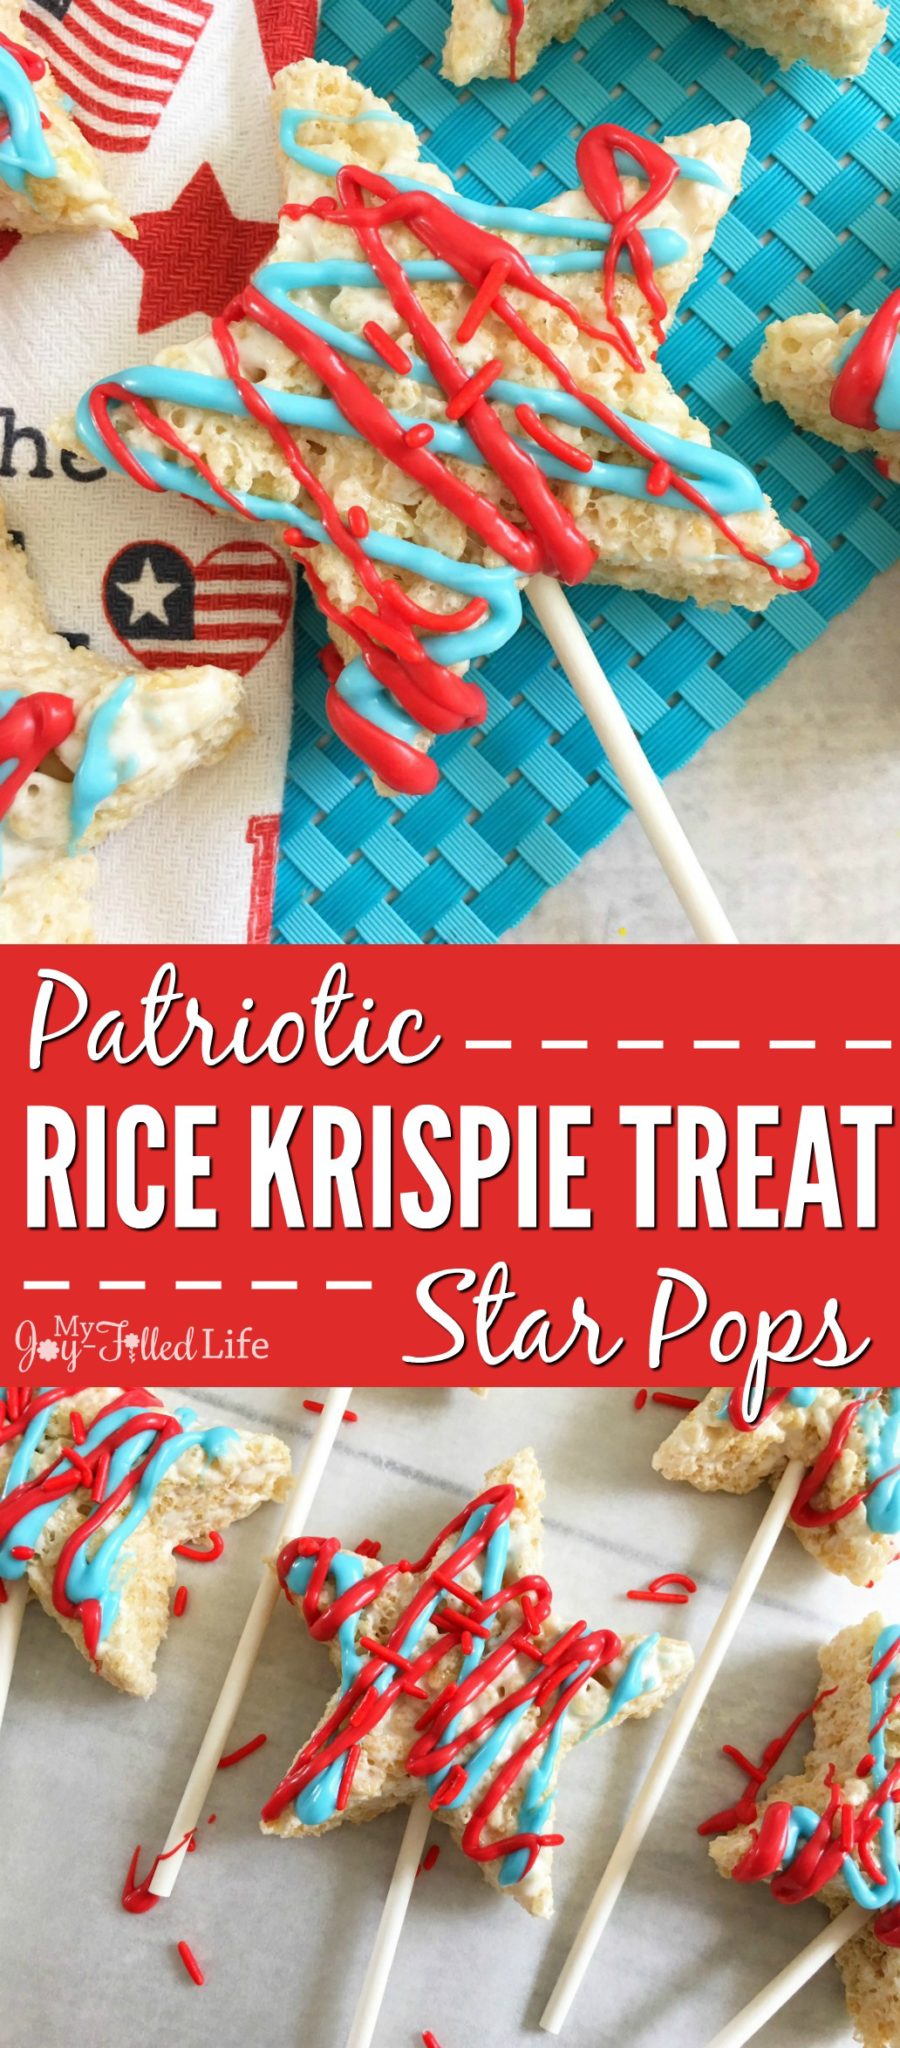 Patriotic Rice Krispie Treat Star Pops 